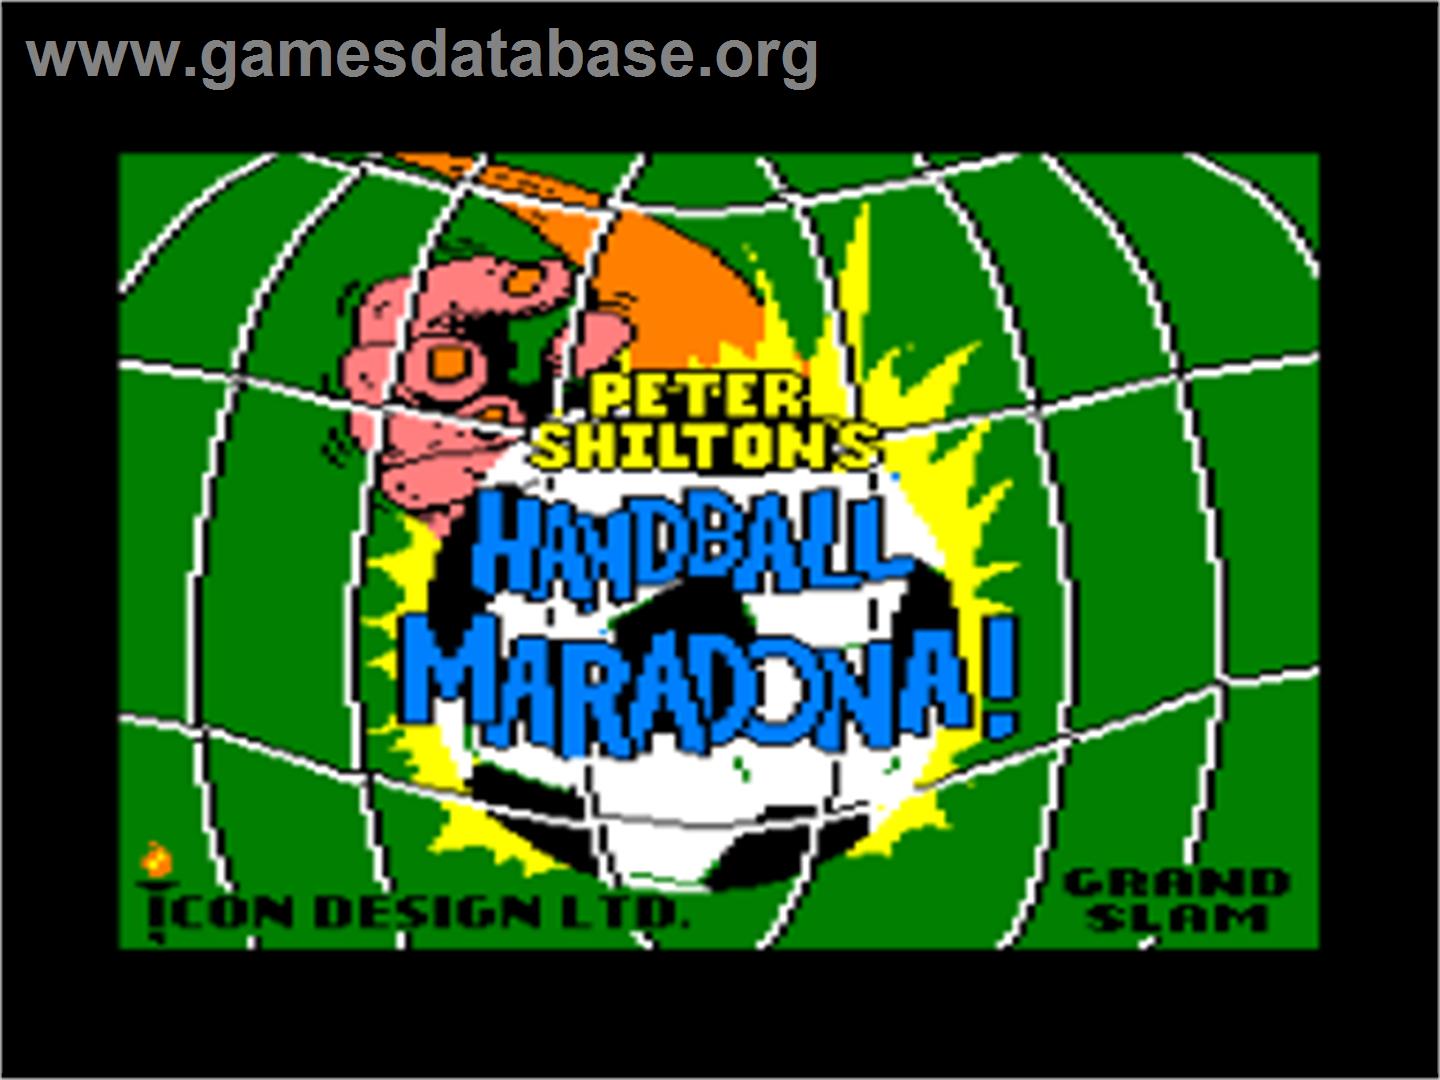 Peter Shilton's Handball Maradona - Amstrad CPC - Artwork - Title Screen